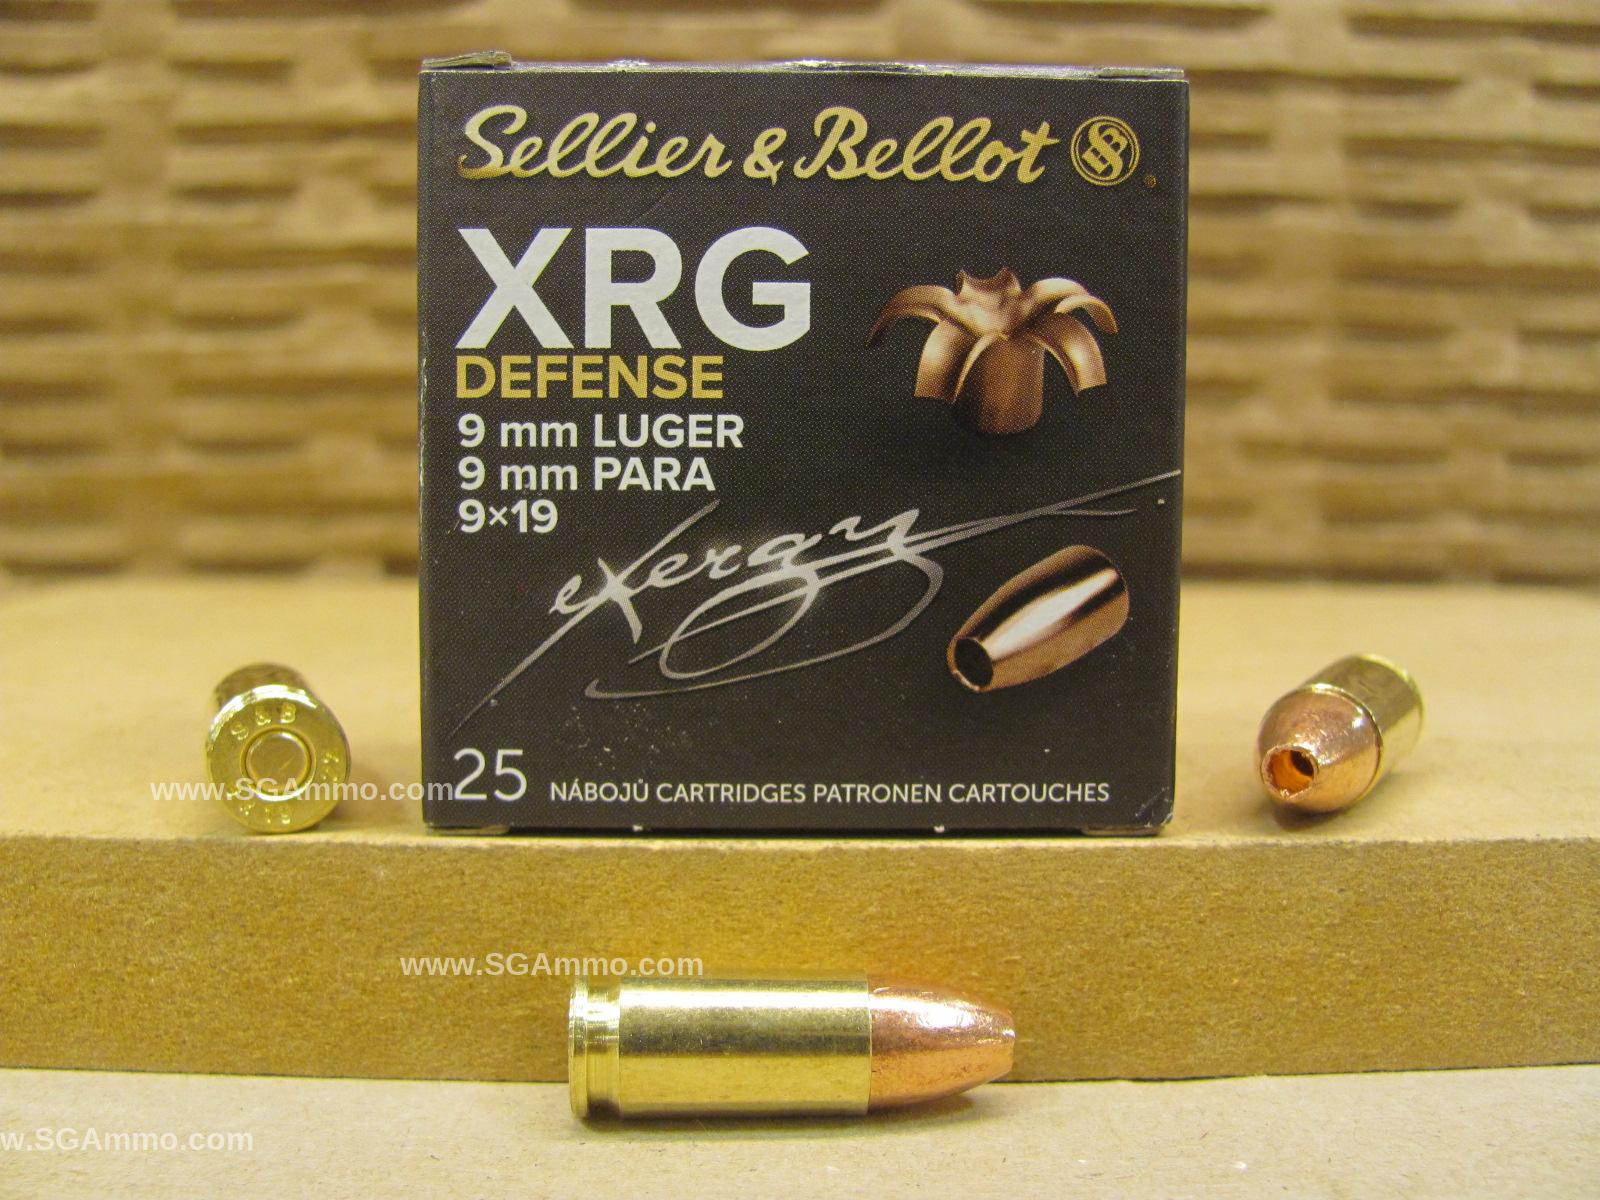 1000 Round Case - 9mm Luger 100 Grain Sellier Bellot XRG Hollow Point Defense Ammo - SB9XA